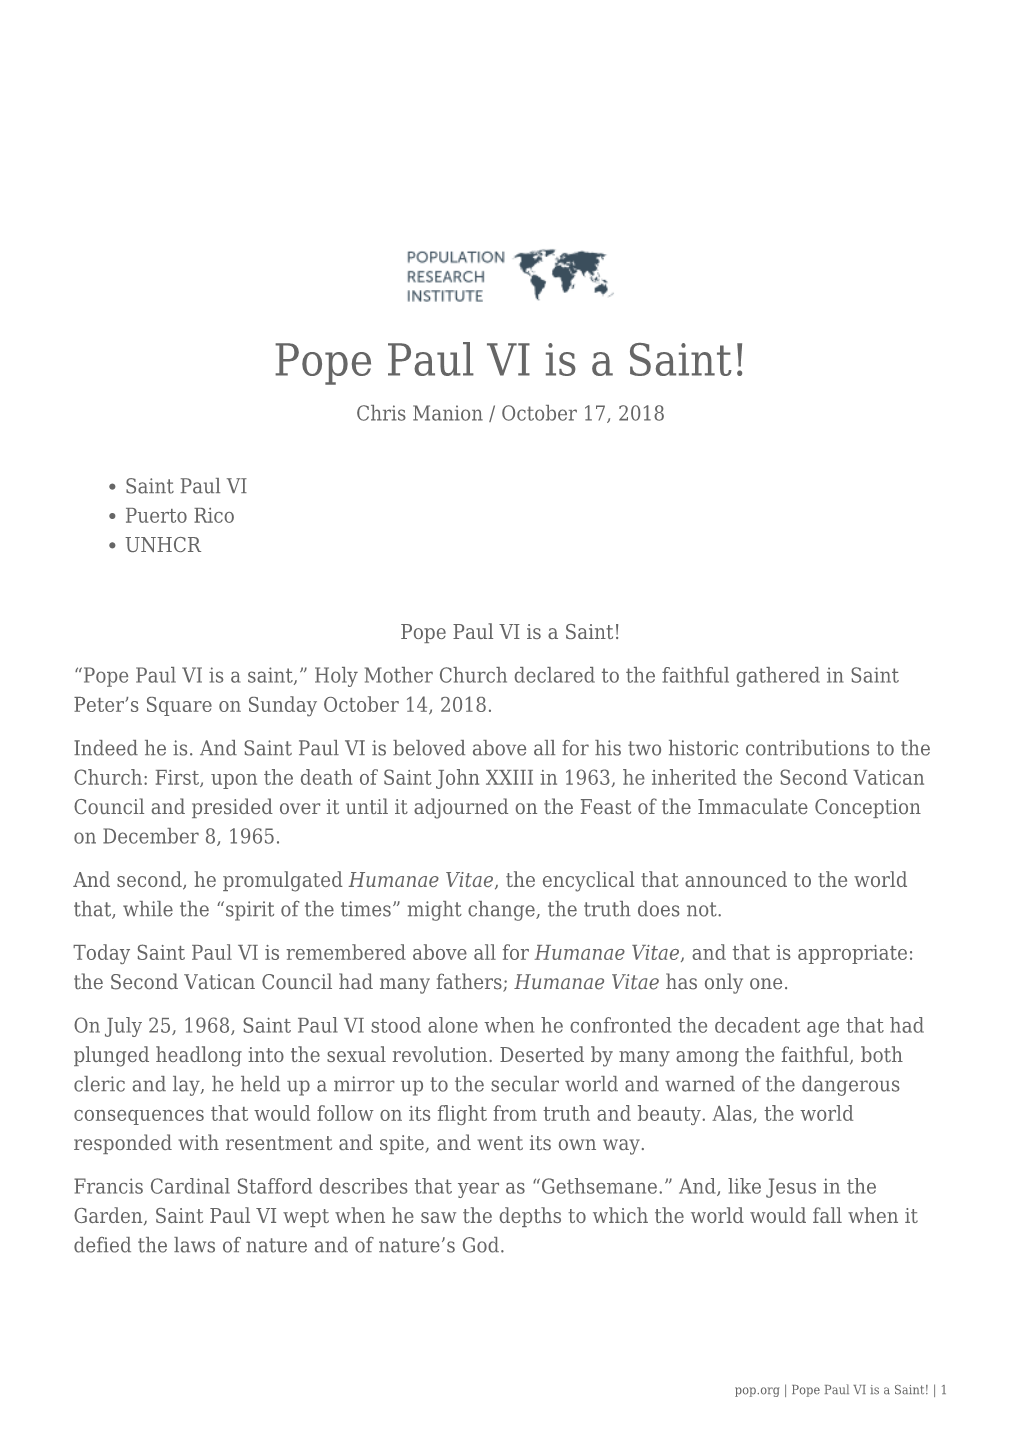 Pope Paul VI Is a Saint! Chris Manion / October 17, 2018